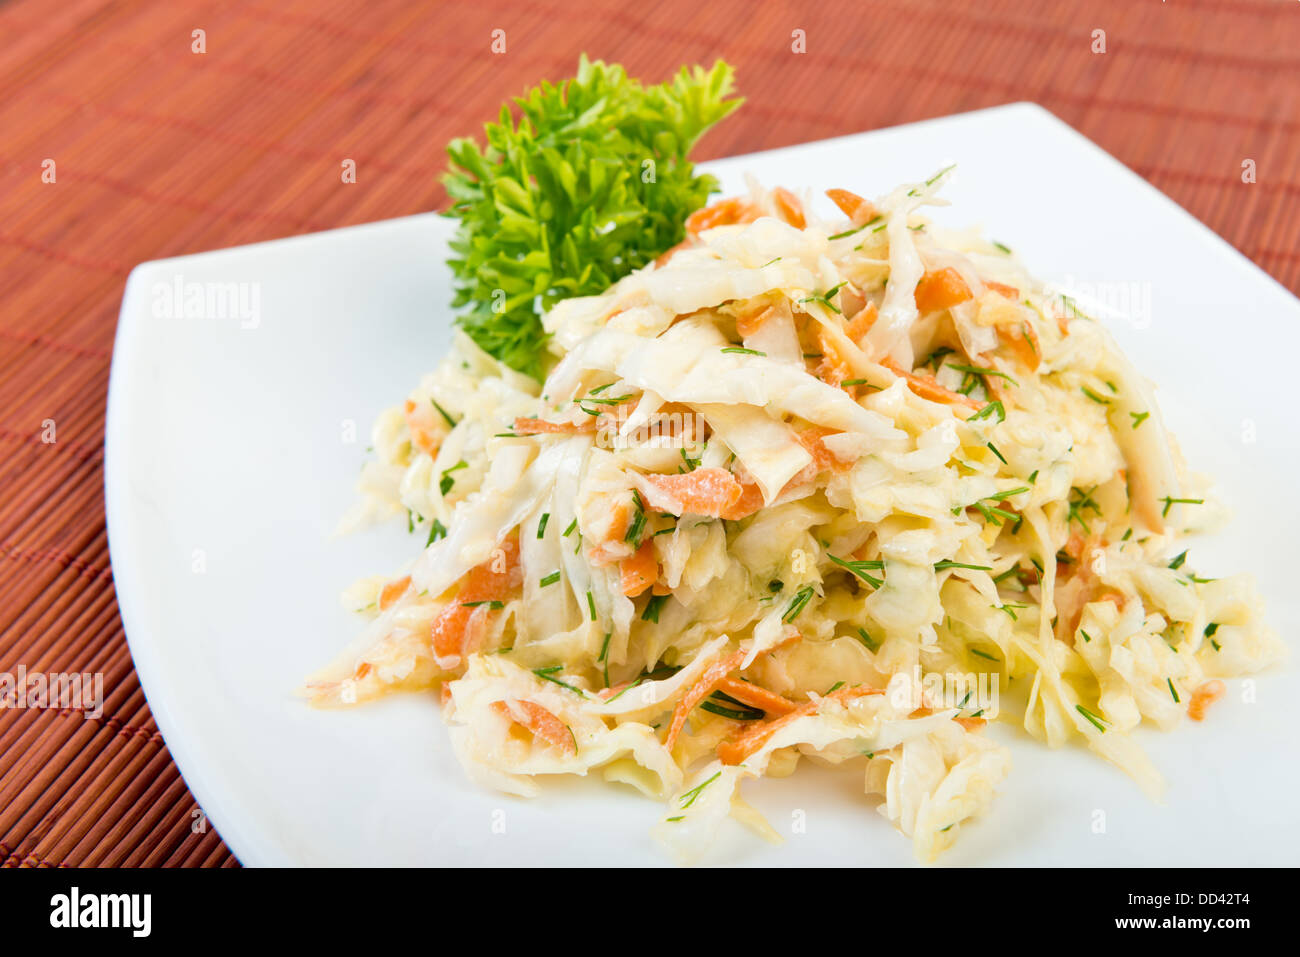 Low fat Gemüsesalat Krautsalat (Kohl, Karotten, Dill, Mayonnaise) auf Teller am Tisch im restaurant Stockfoto